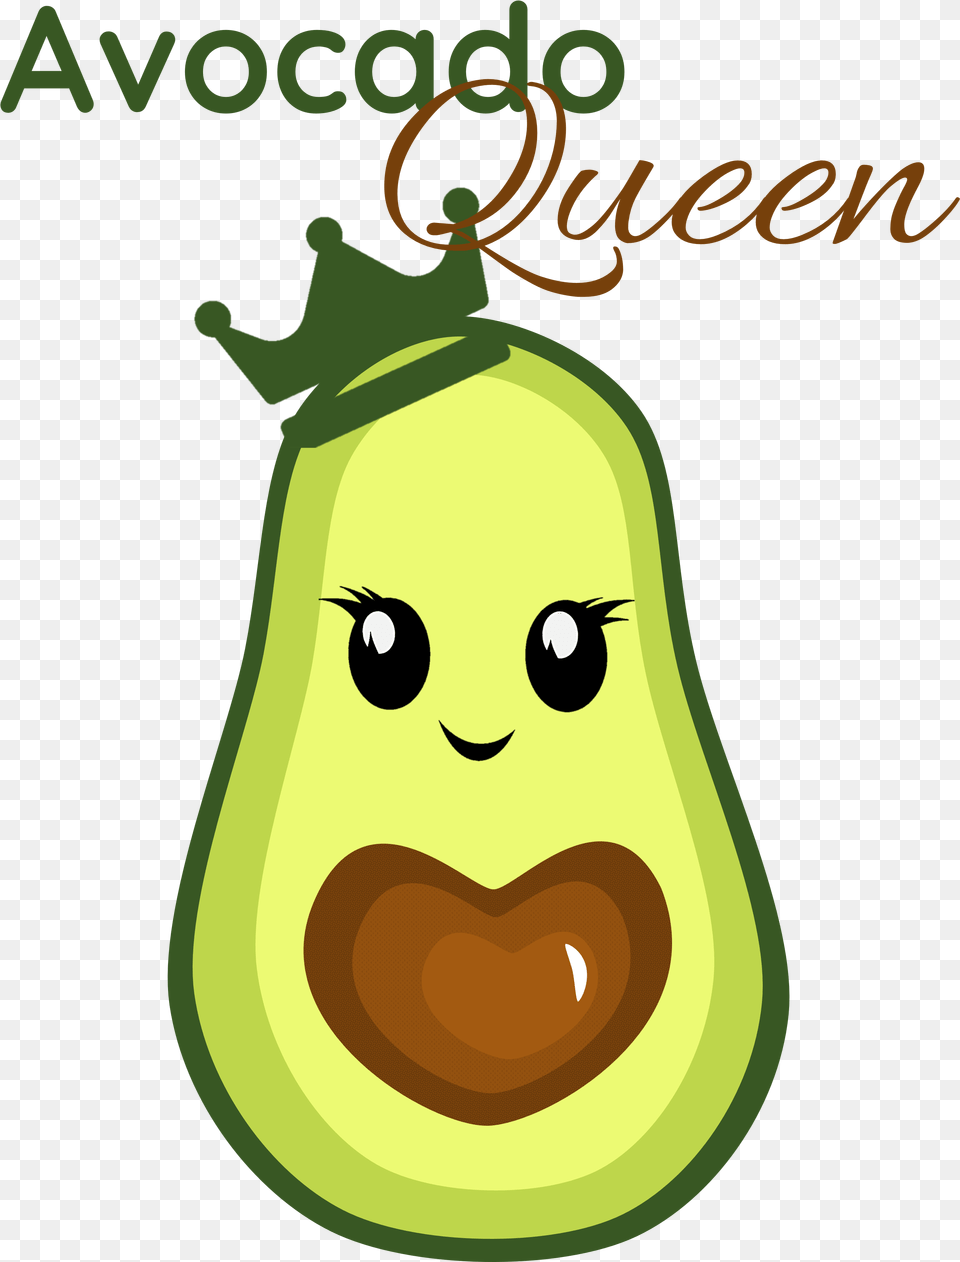 Avocado Queen With Heart Avocado Queen, Food, Fruit, Plant, Produce Png